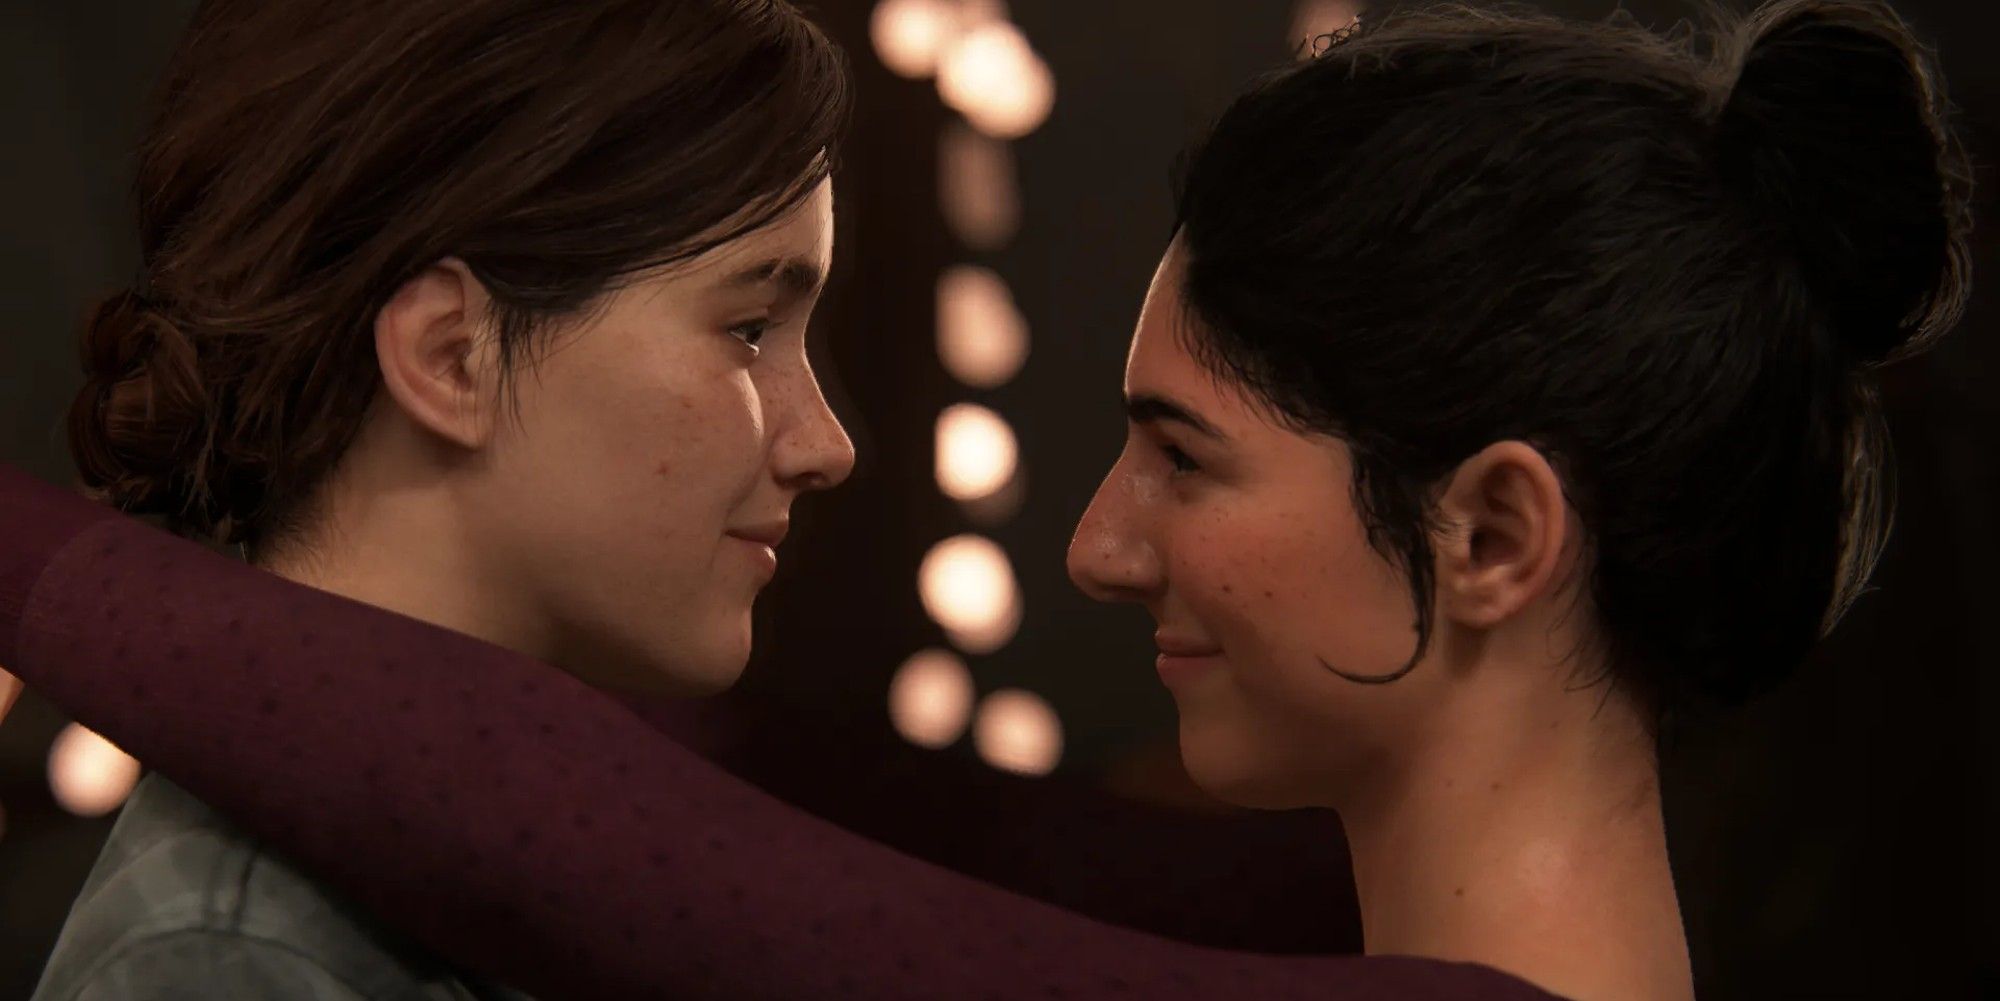 It's confirmed: 'The Last of Us Part II' will span multiple seasons of TV